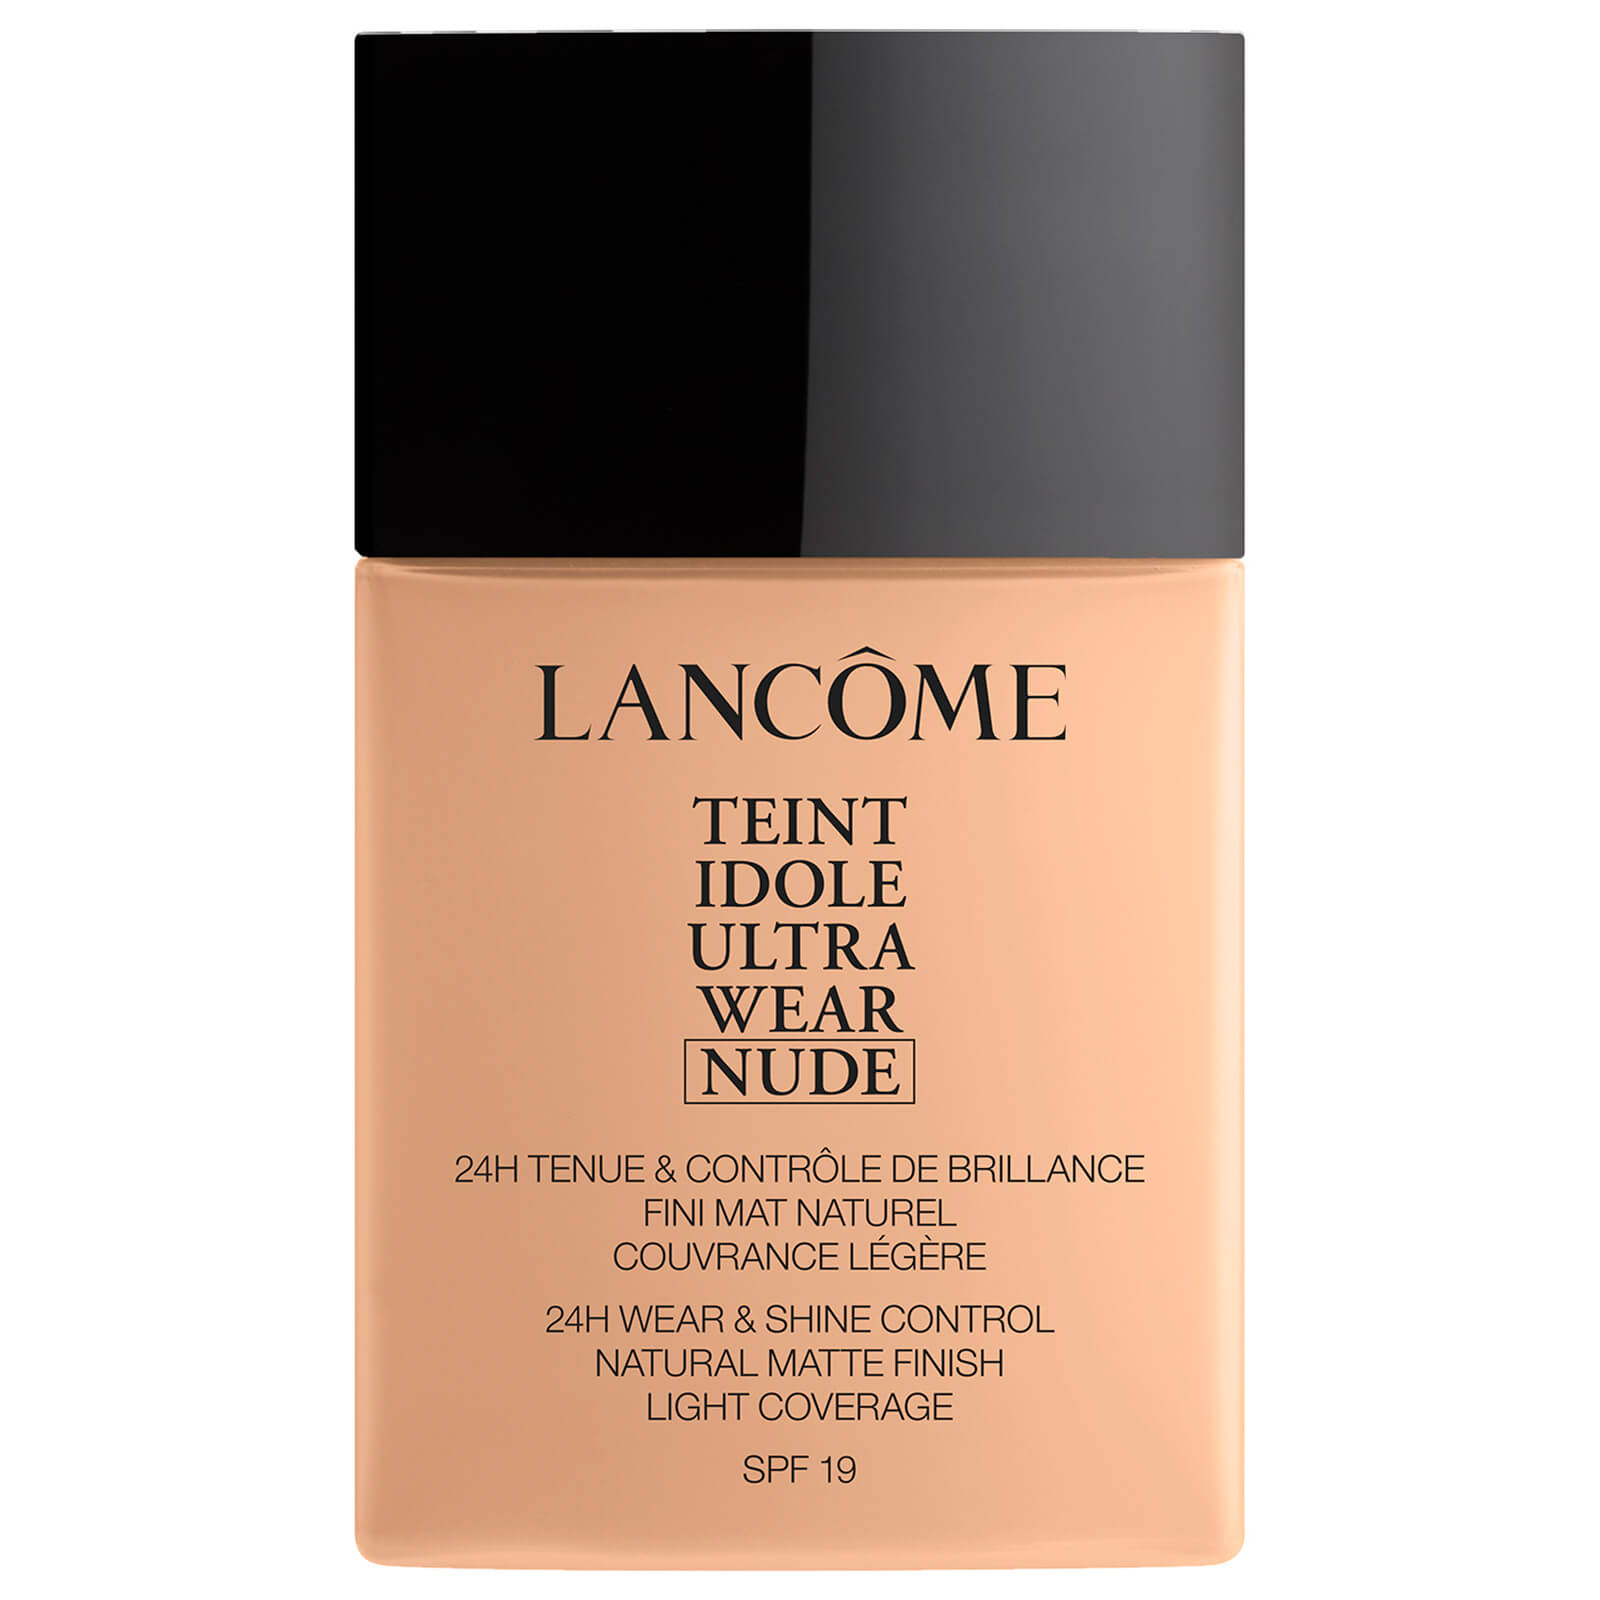 Lancôme Teint Idole Ultra Wear Nude Foundation 40ml (Various Shades) - 01 Beige Albâtre